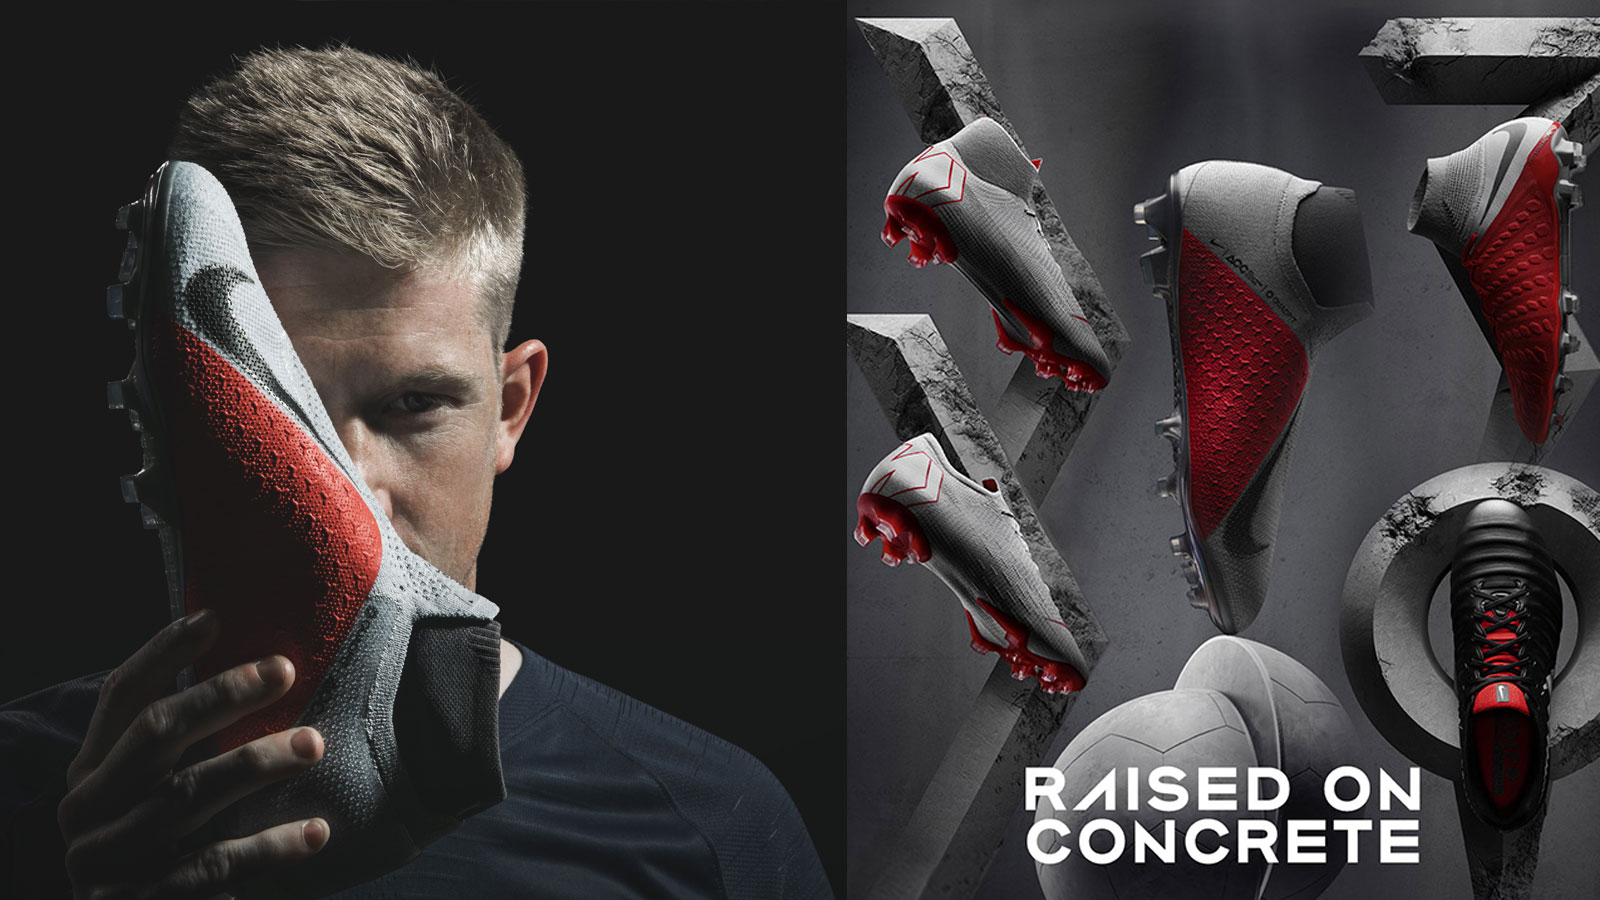 Das Nike Raised on concrete Pack